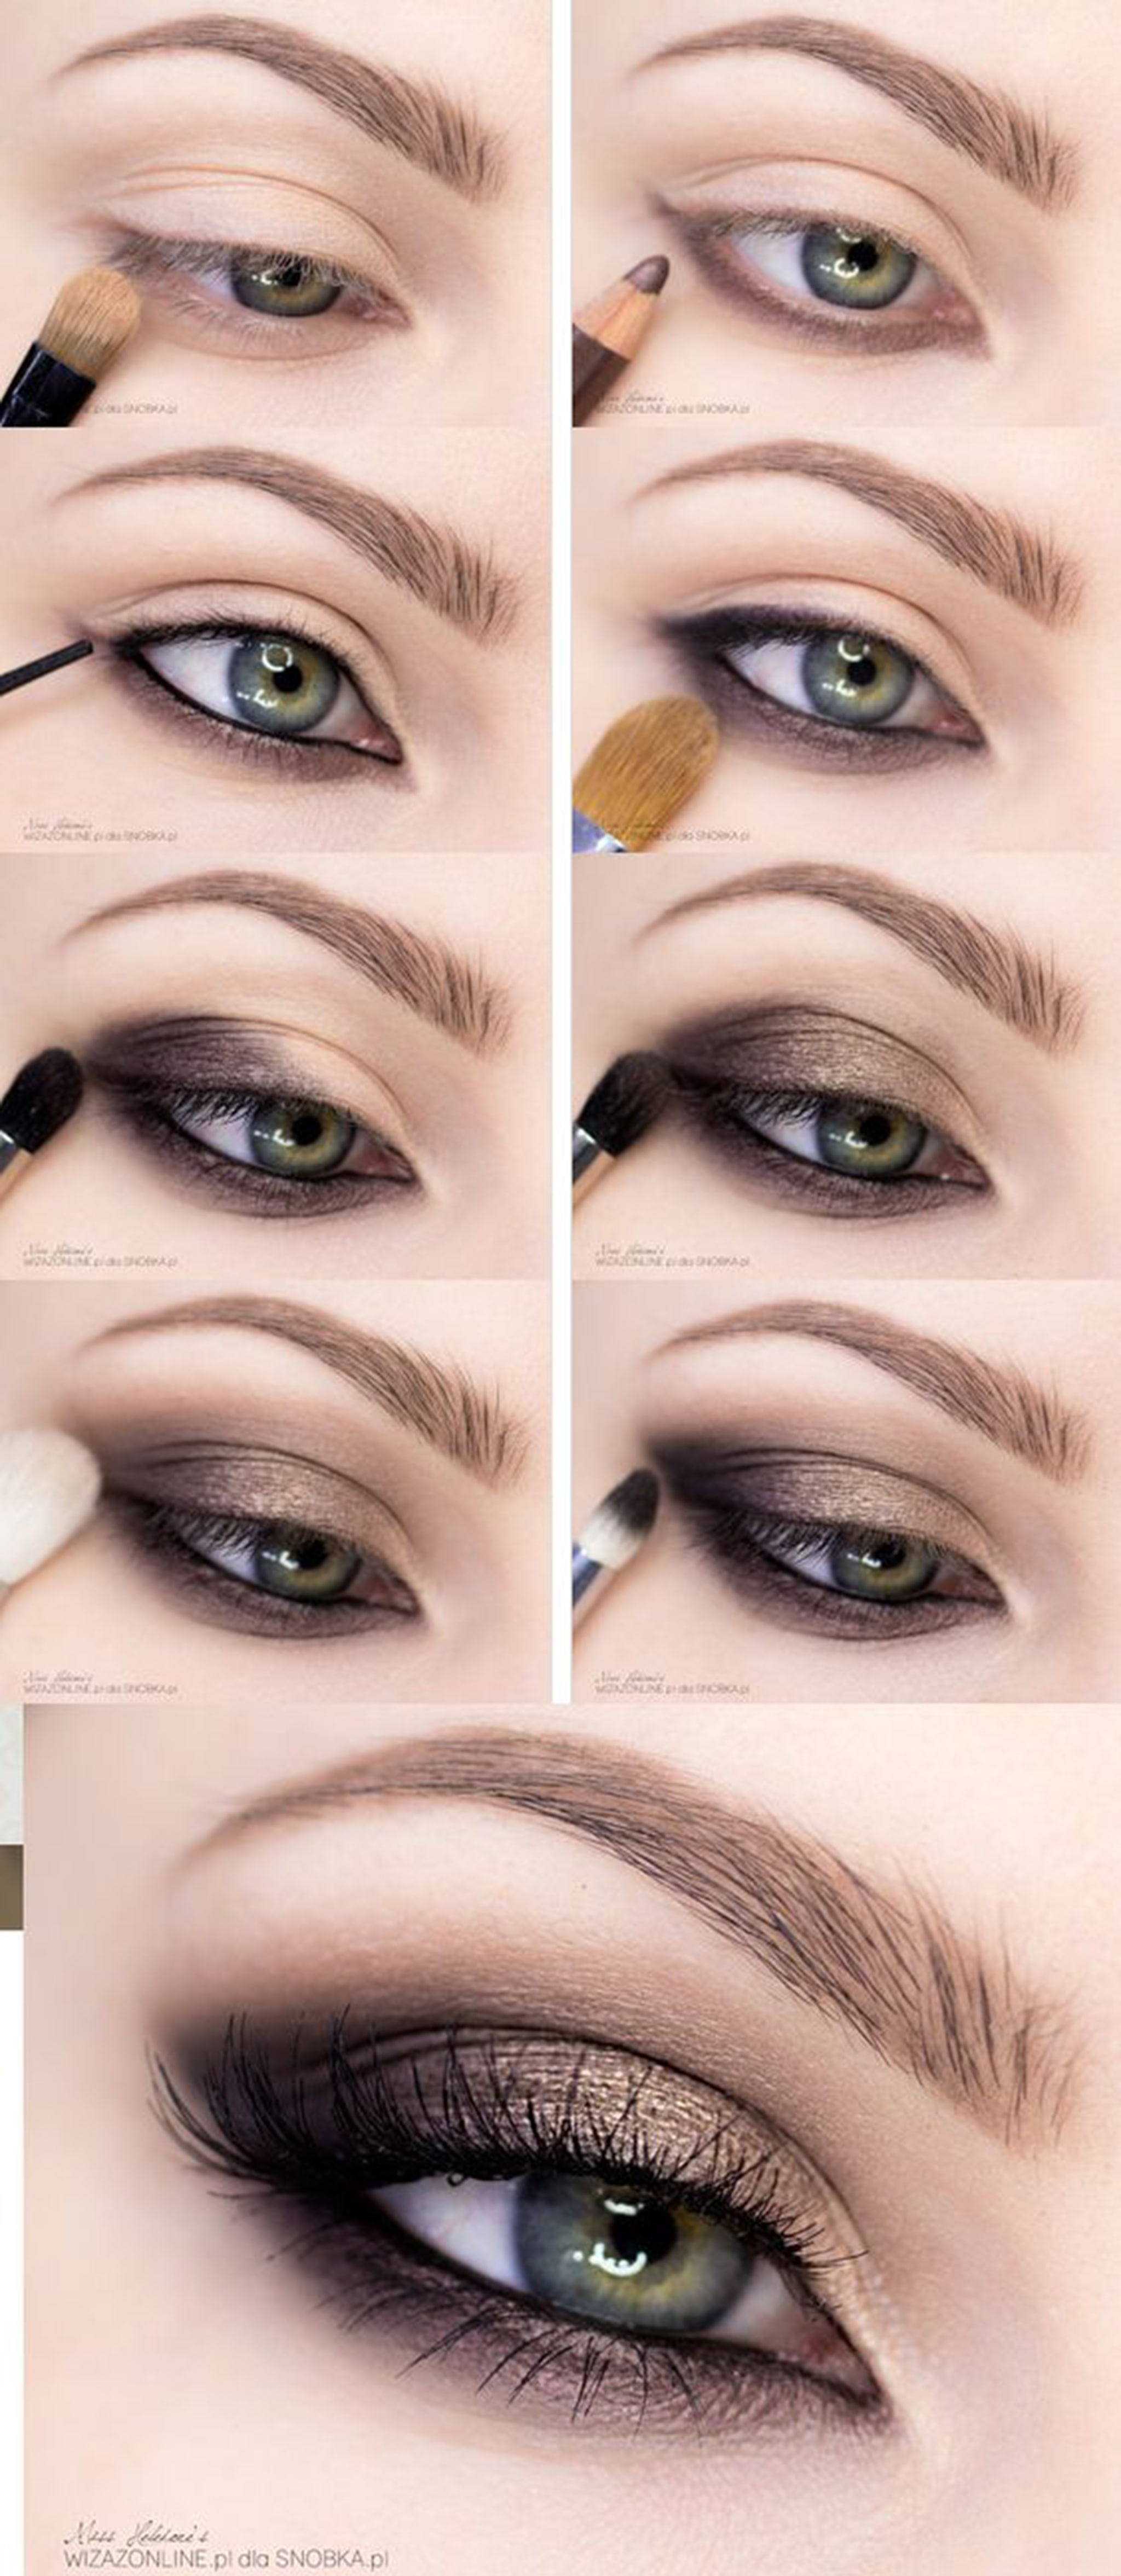 How To Create Smokey Eye Makeup 15 Smokey Eye Tutorials Step Step Guide To Perfect Hollywood Makeup